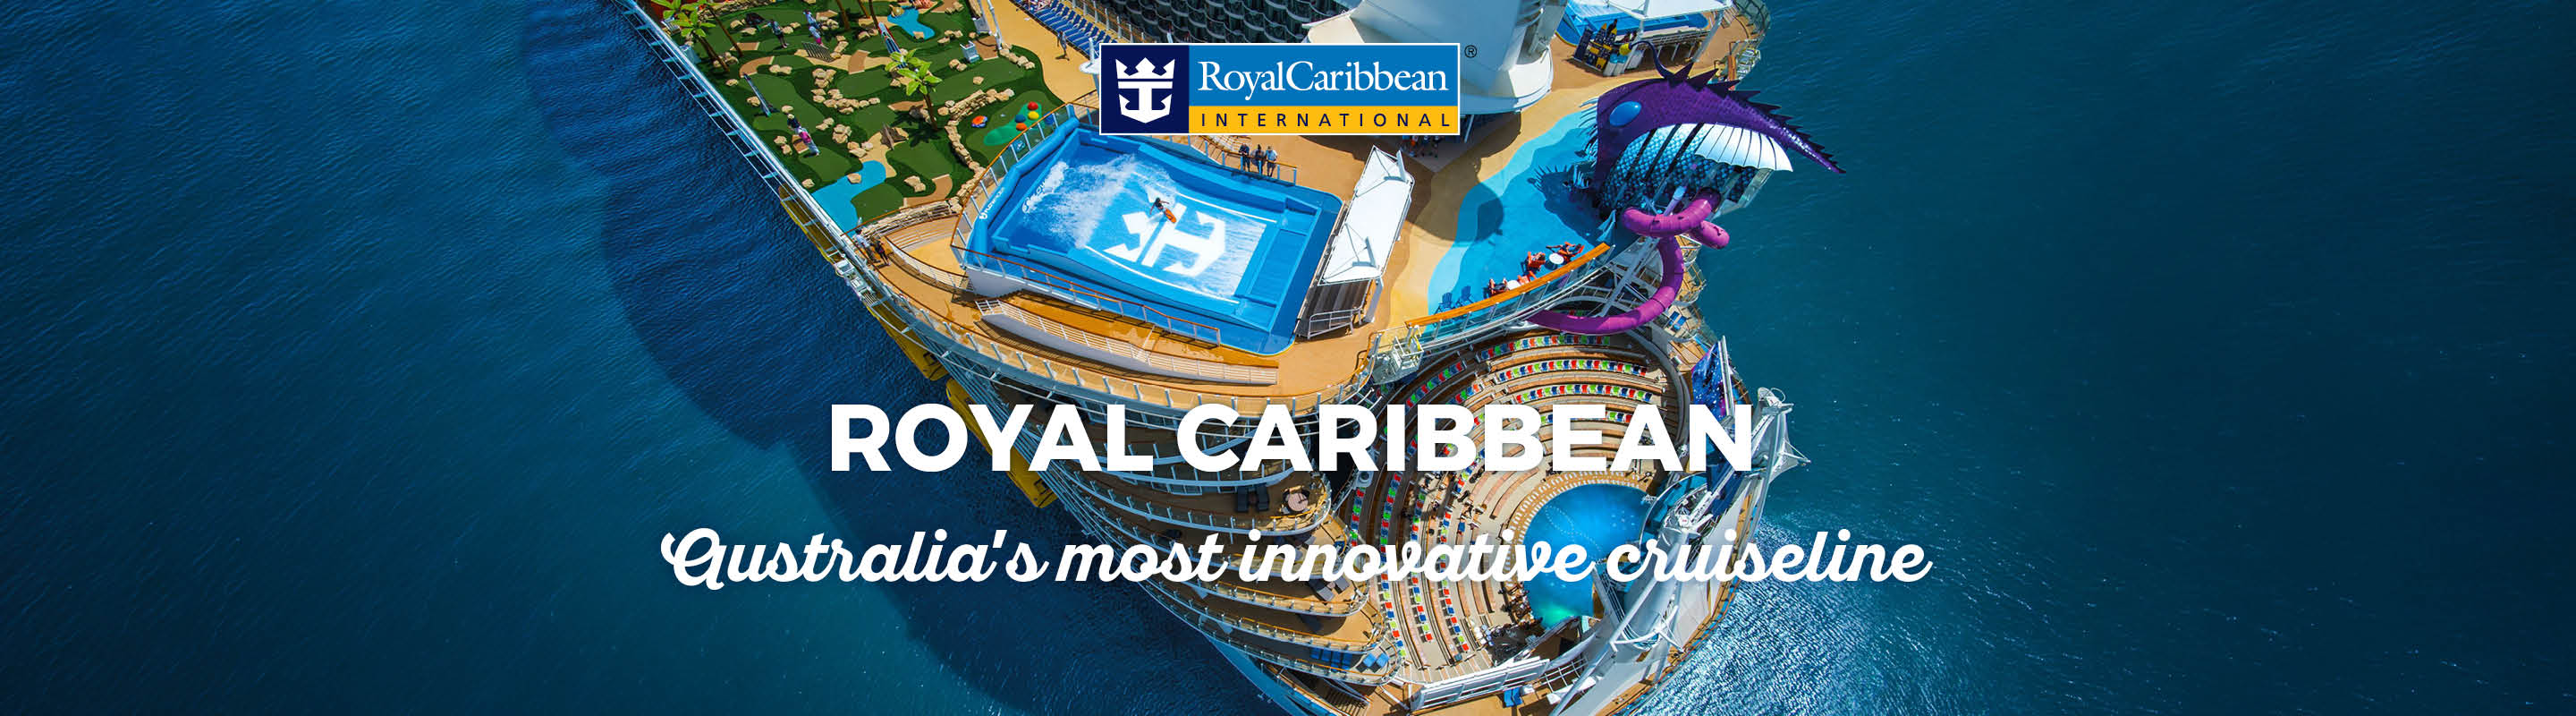 royal-caribbean-cruise-offers.jpg